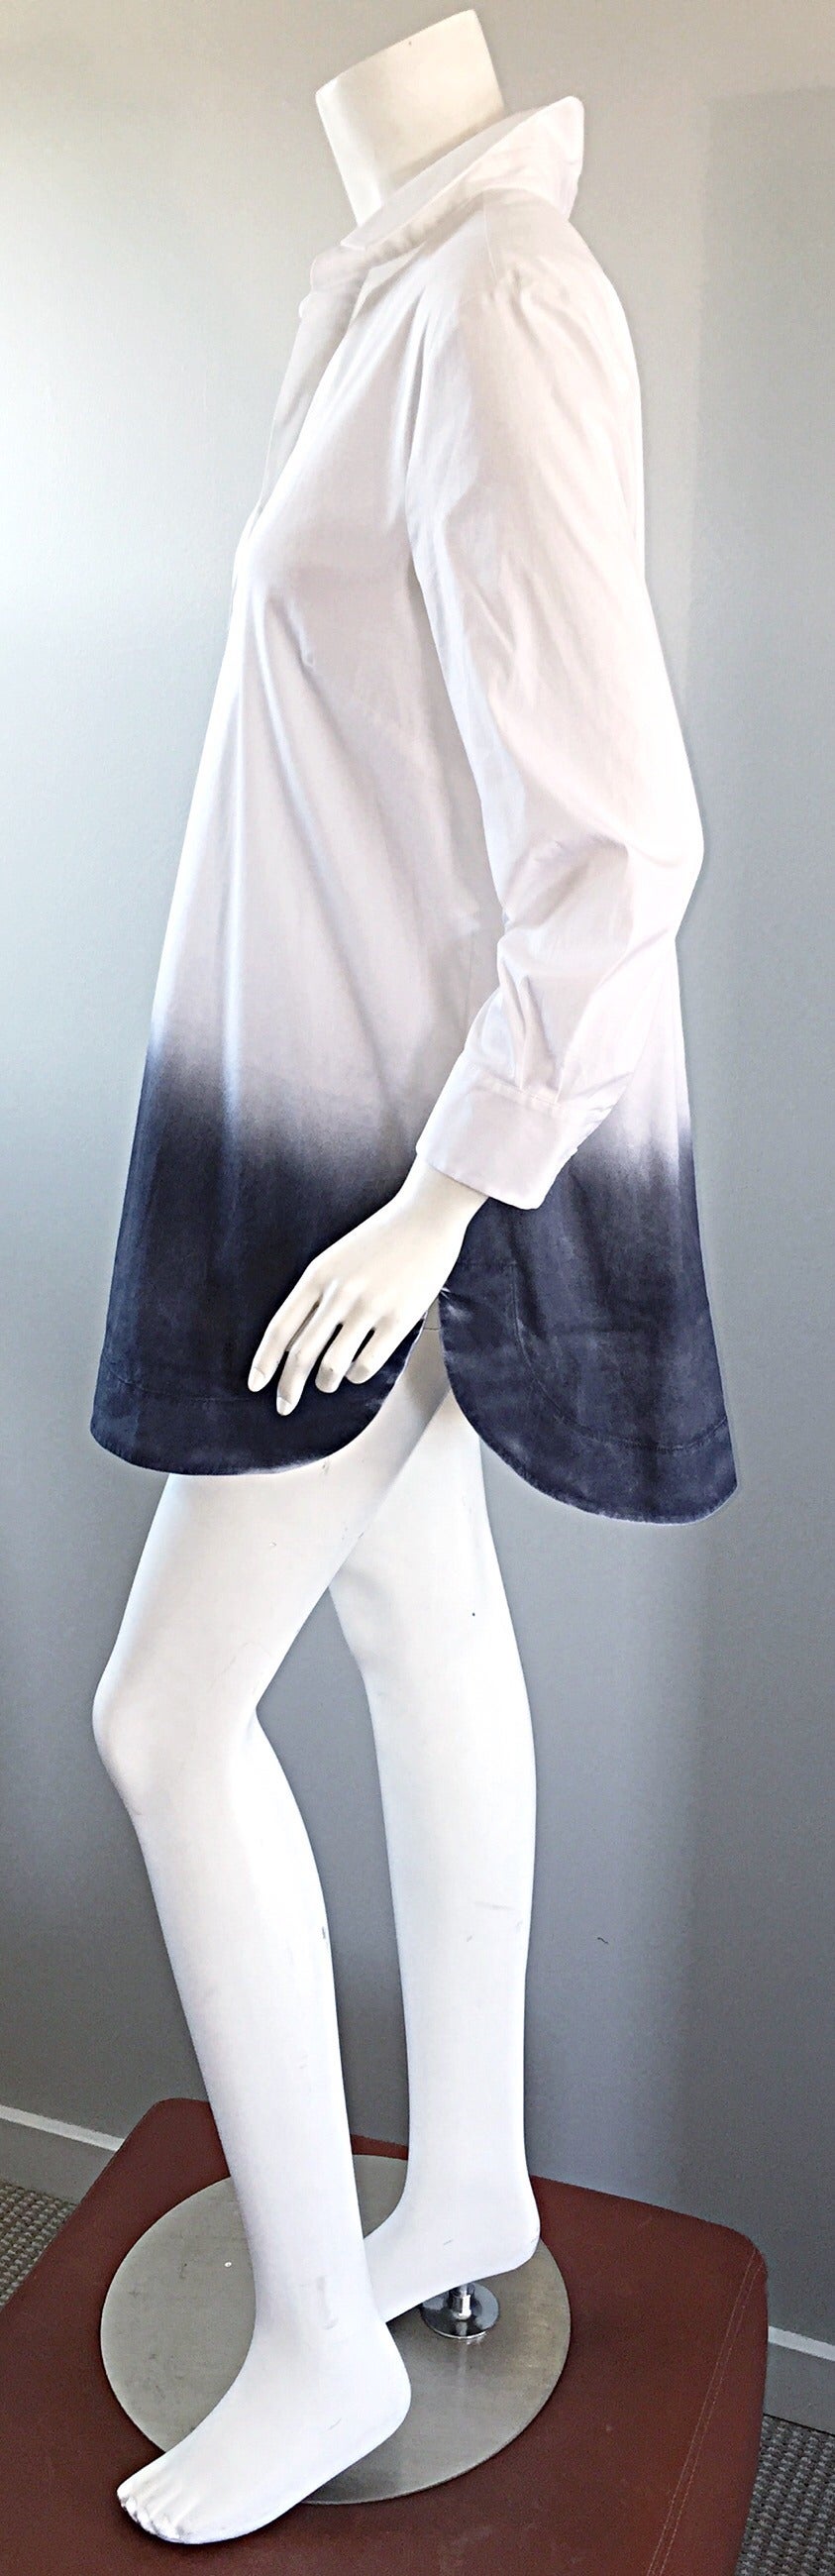 Women's Brand New Piazza Sempione White + Gray Dip - Dyed Cotton Tunic Shirt